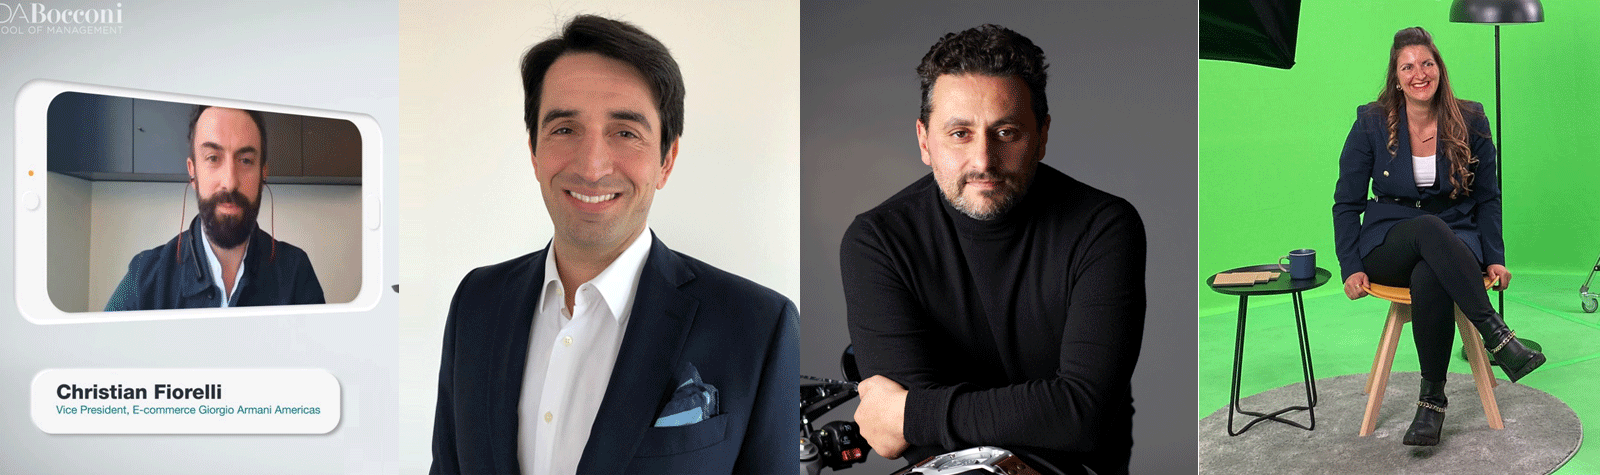 Christian Fiorelli, Matteo Profumo, Davide Pagani e Daniela Cannata su Ecommerce Management – SDA Bocconi